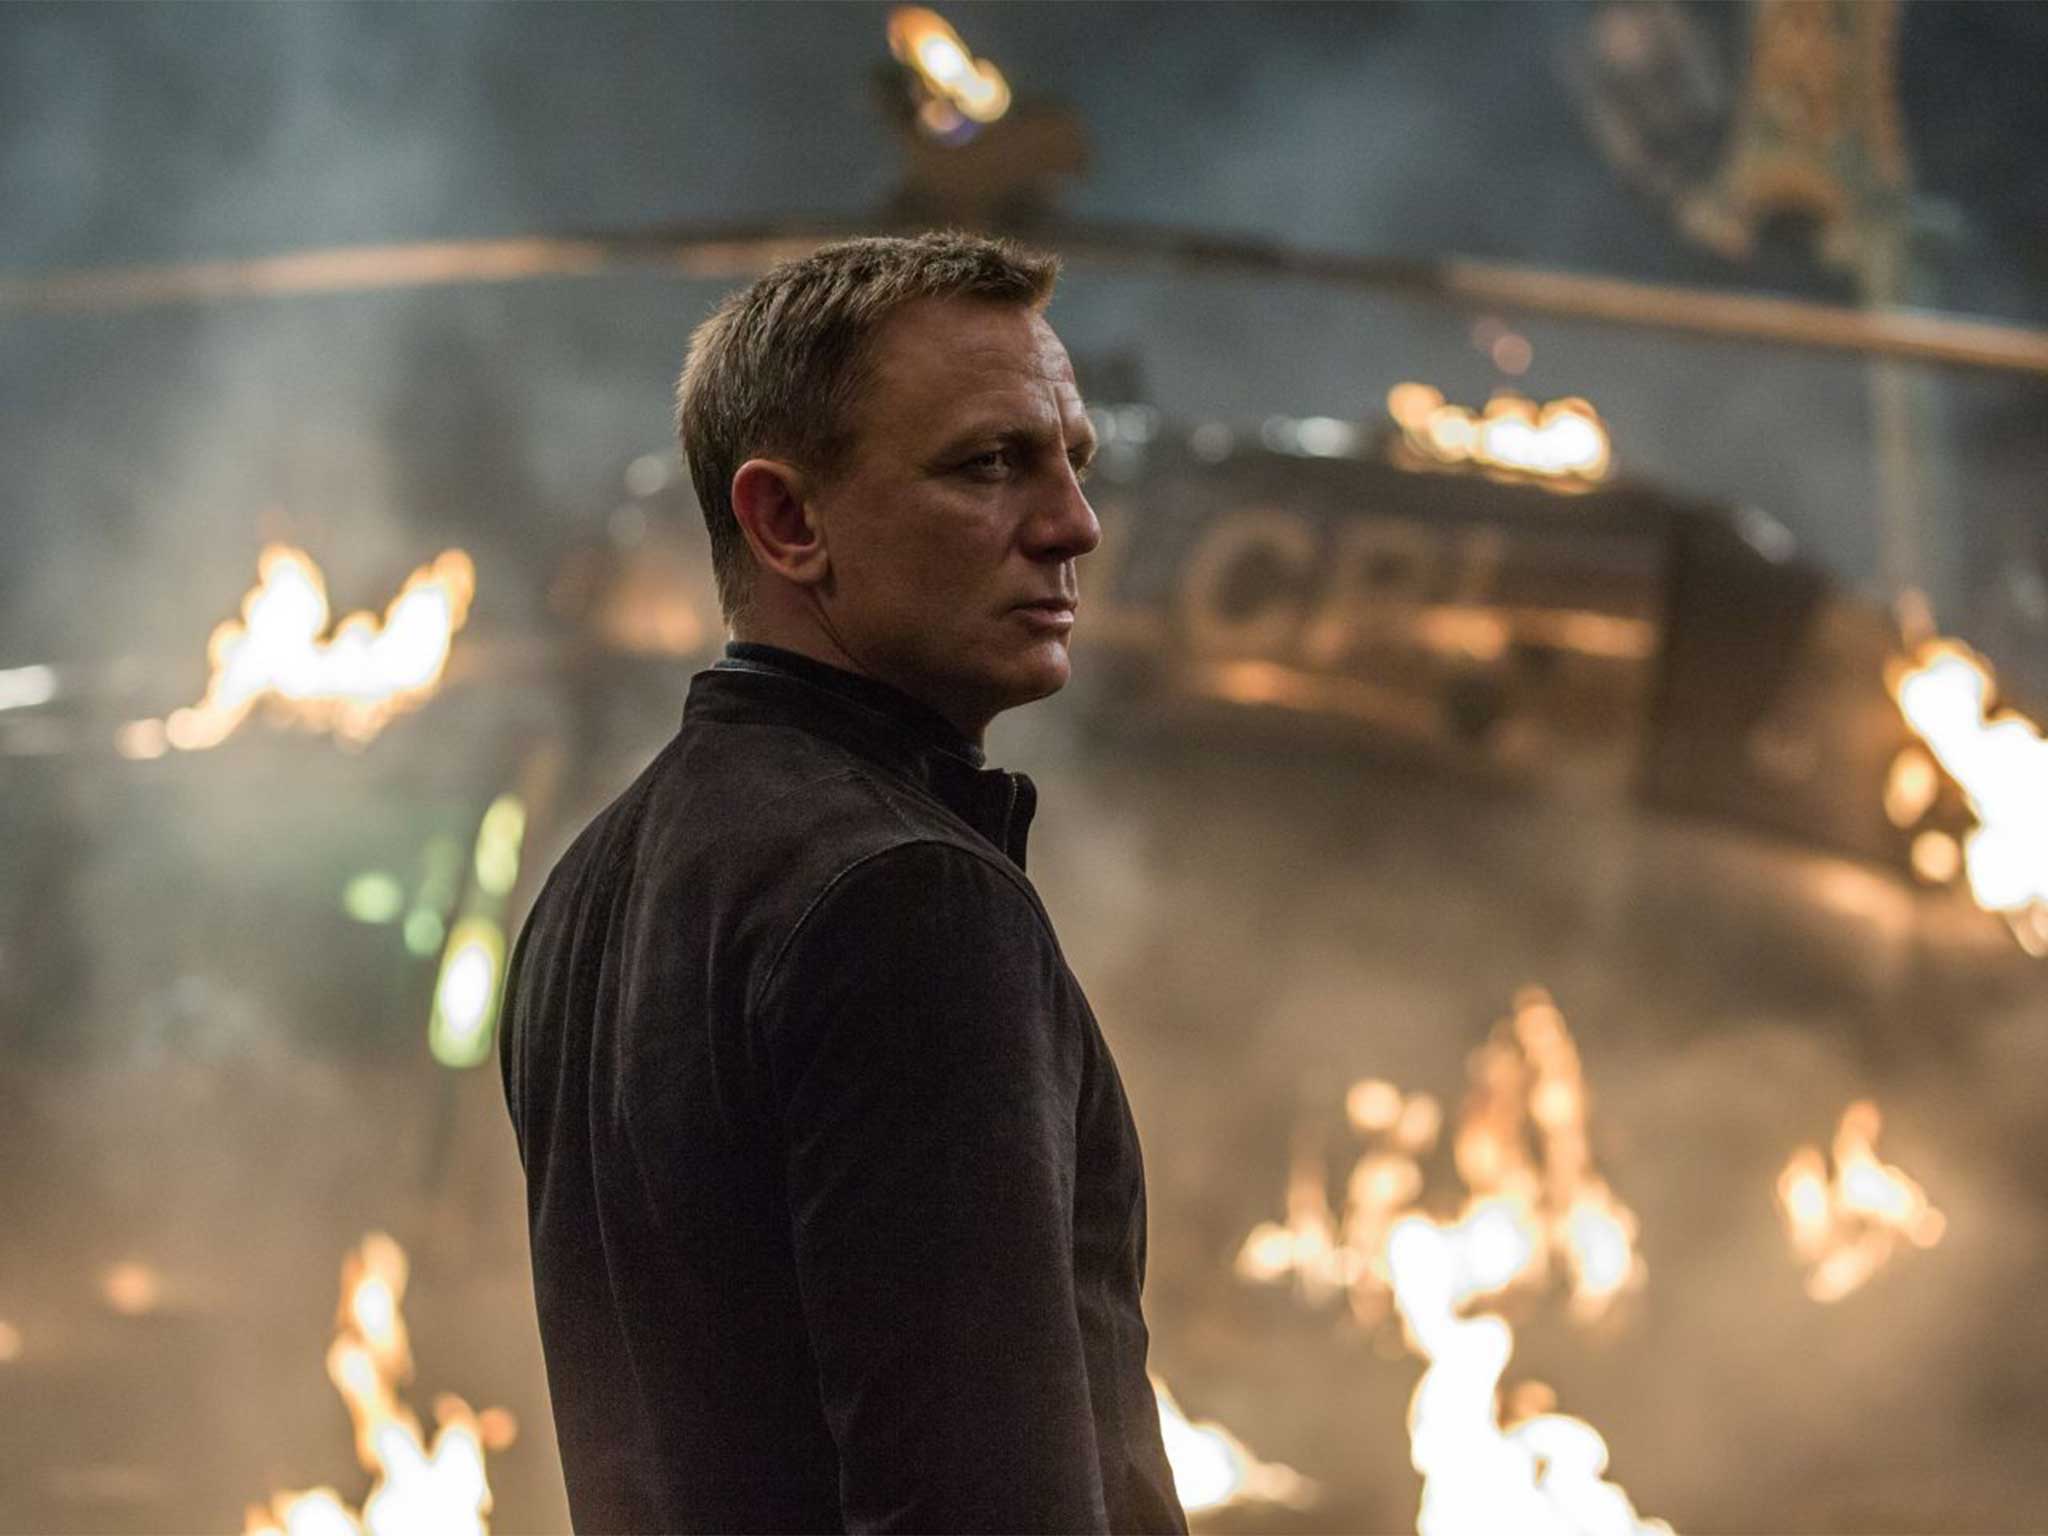 James Bond actor Daniel Craig films a scene for ‘Spectre’ at Pinewood Studios